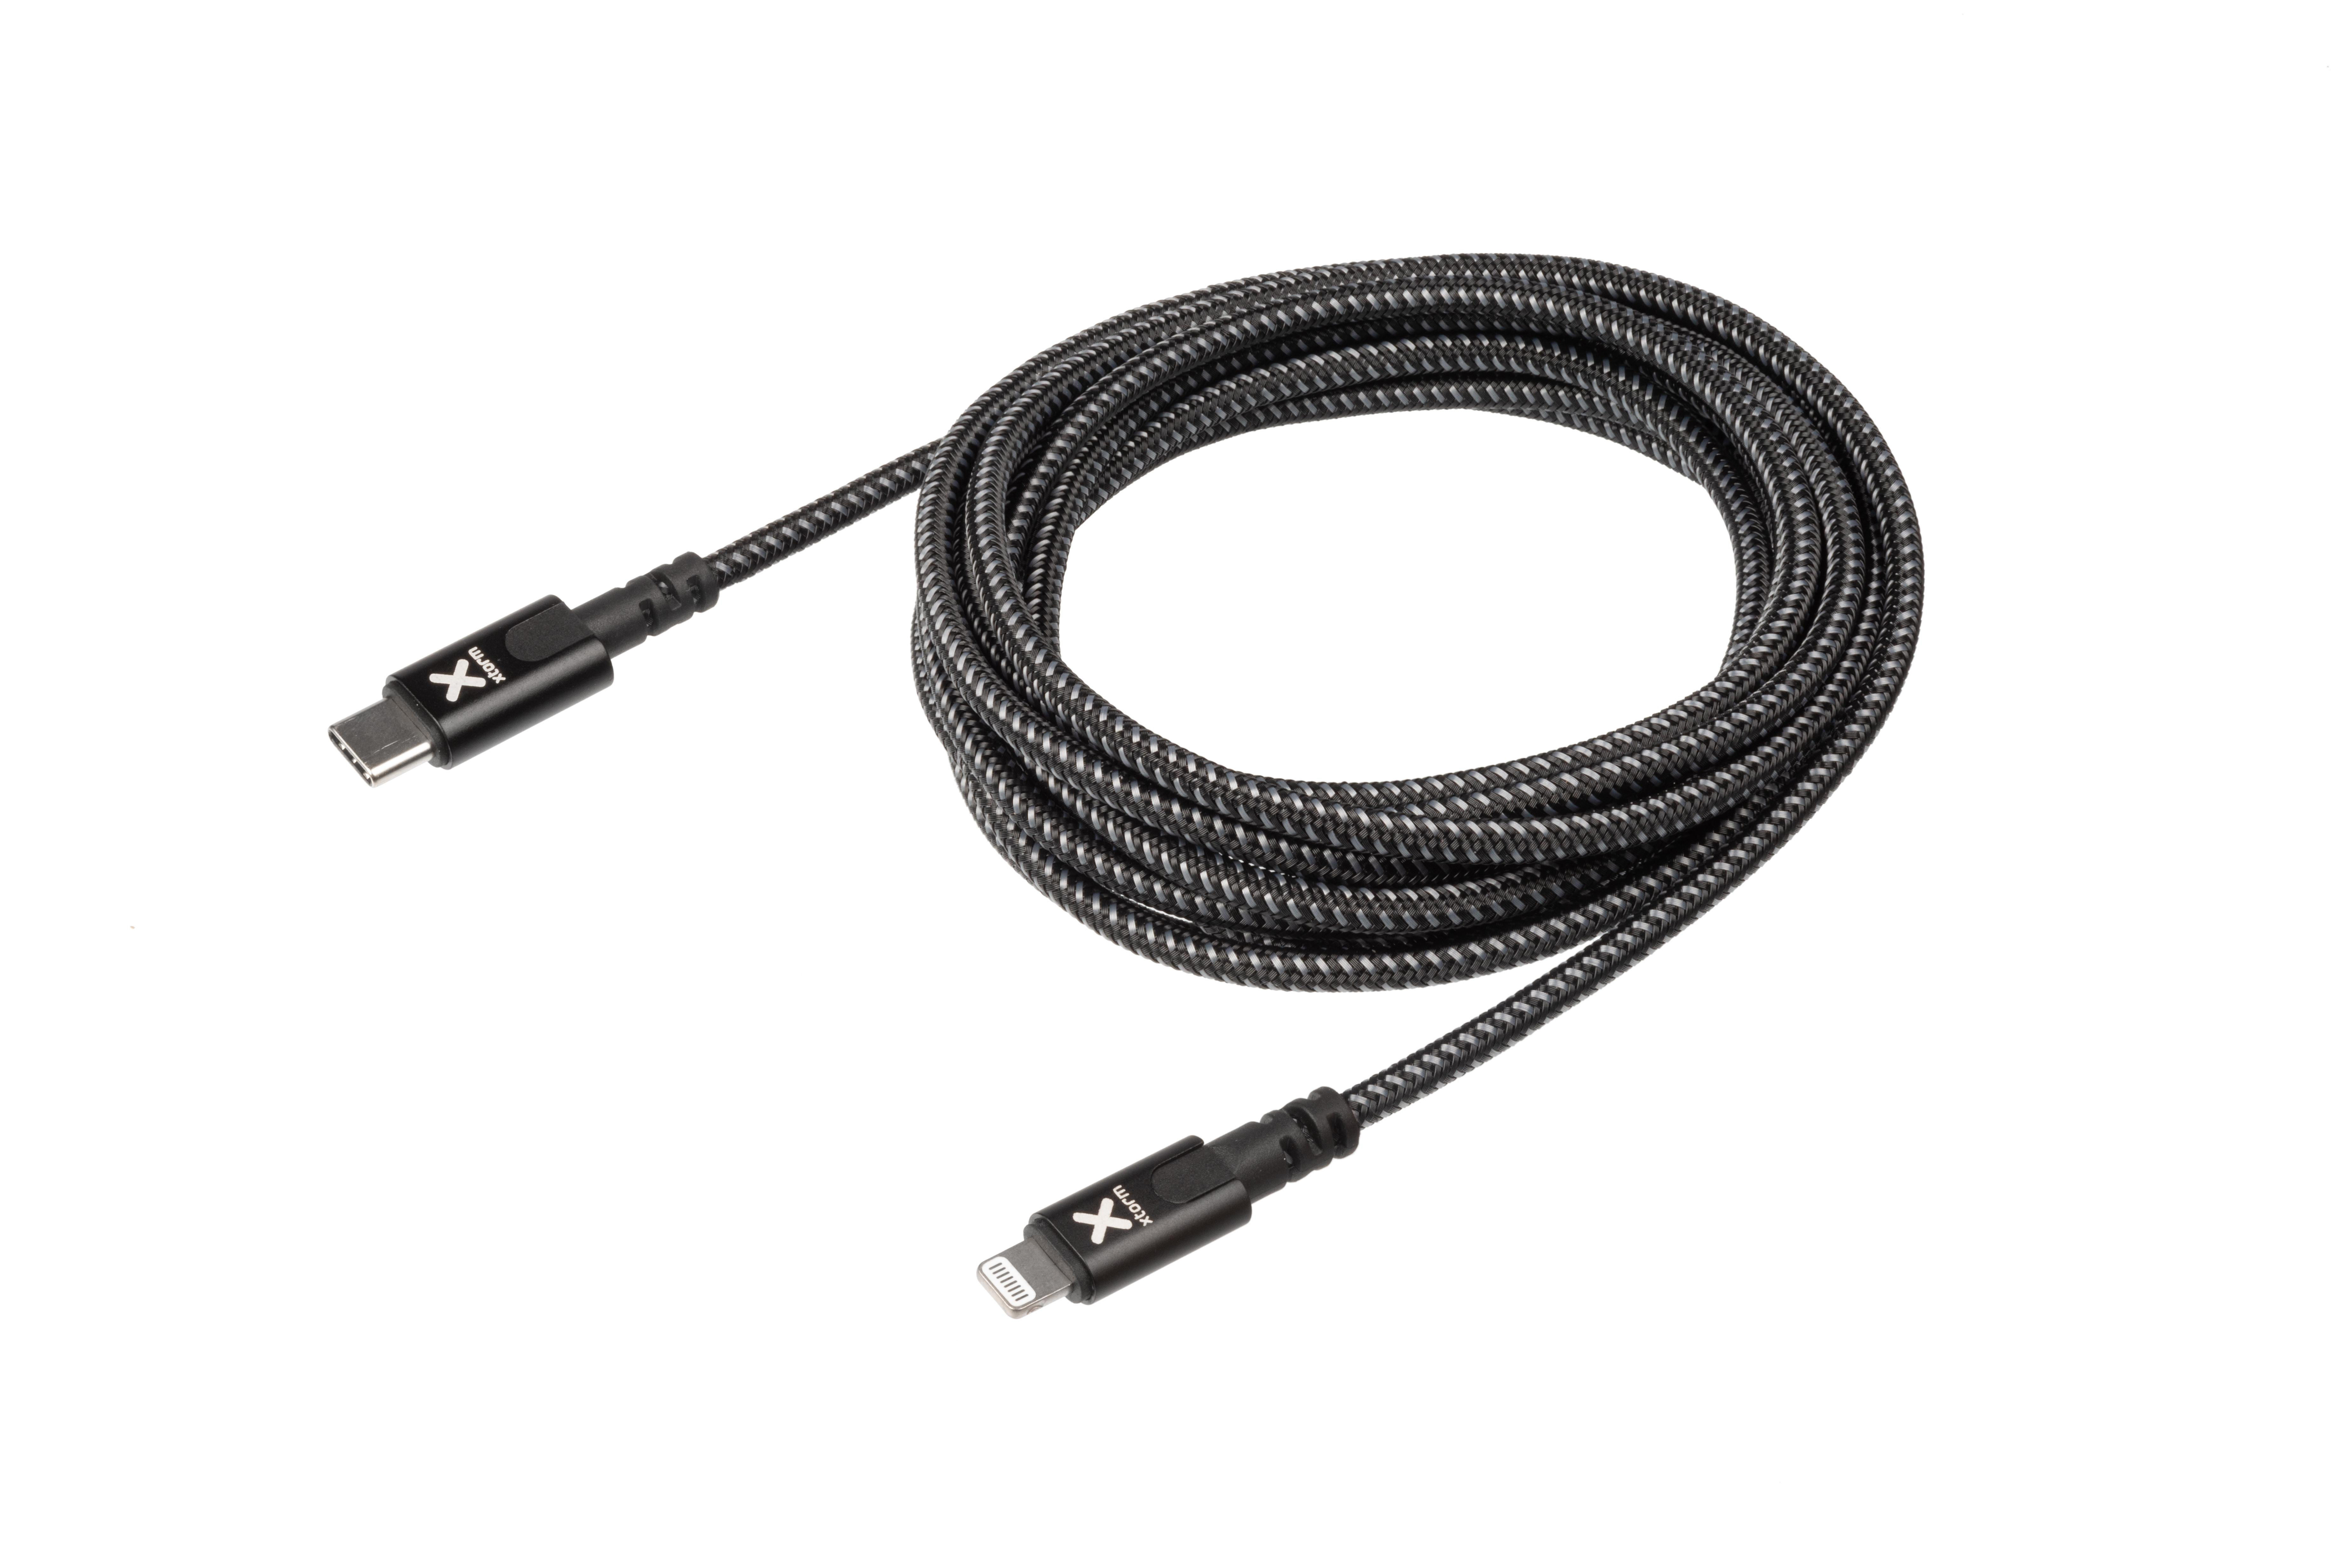 USB XTORM (1m) Original Kabel USB Schwarz Lightning Kabel auf